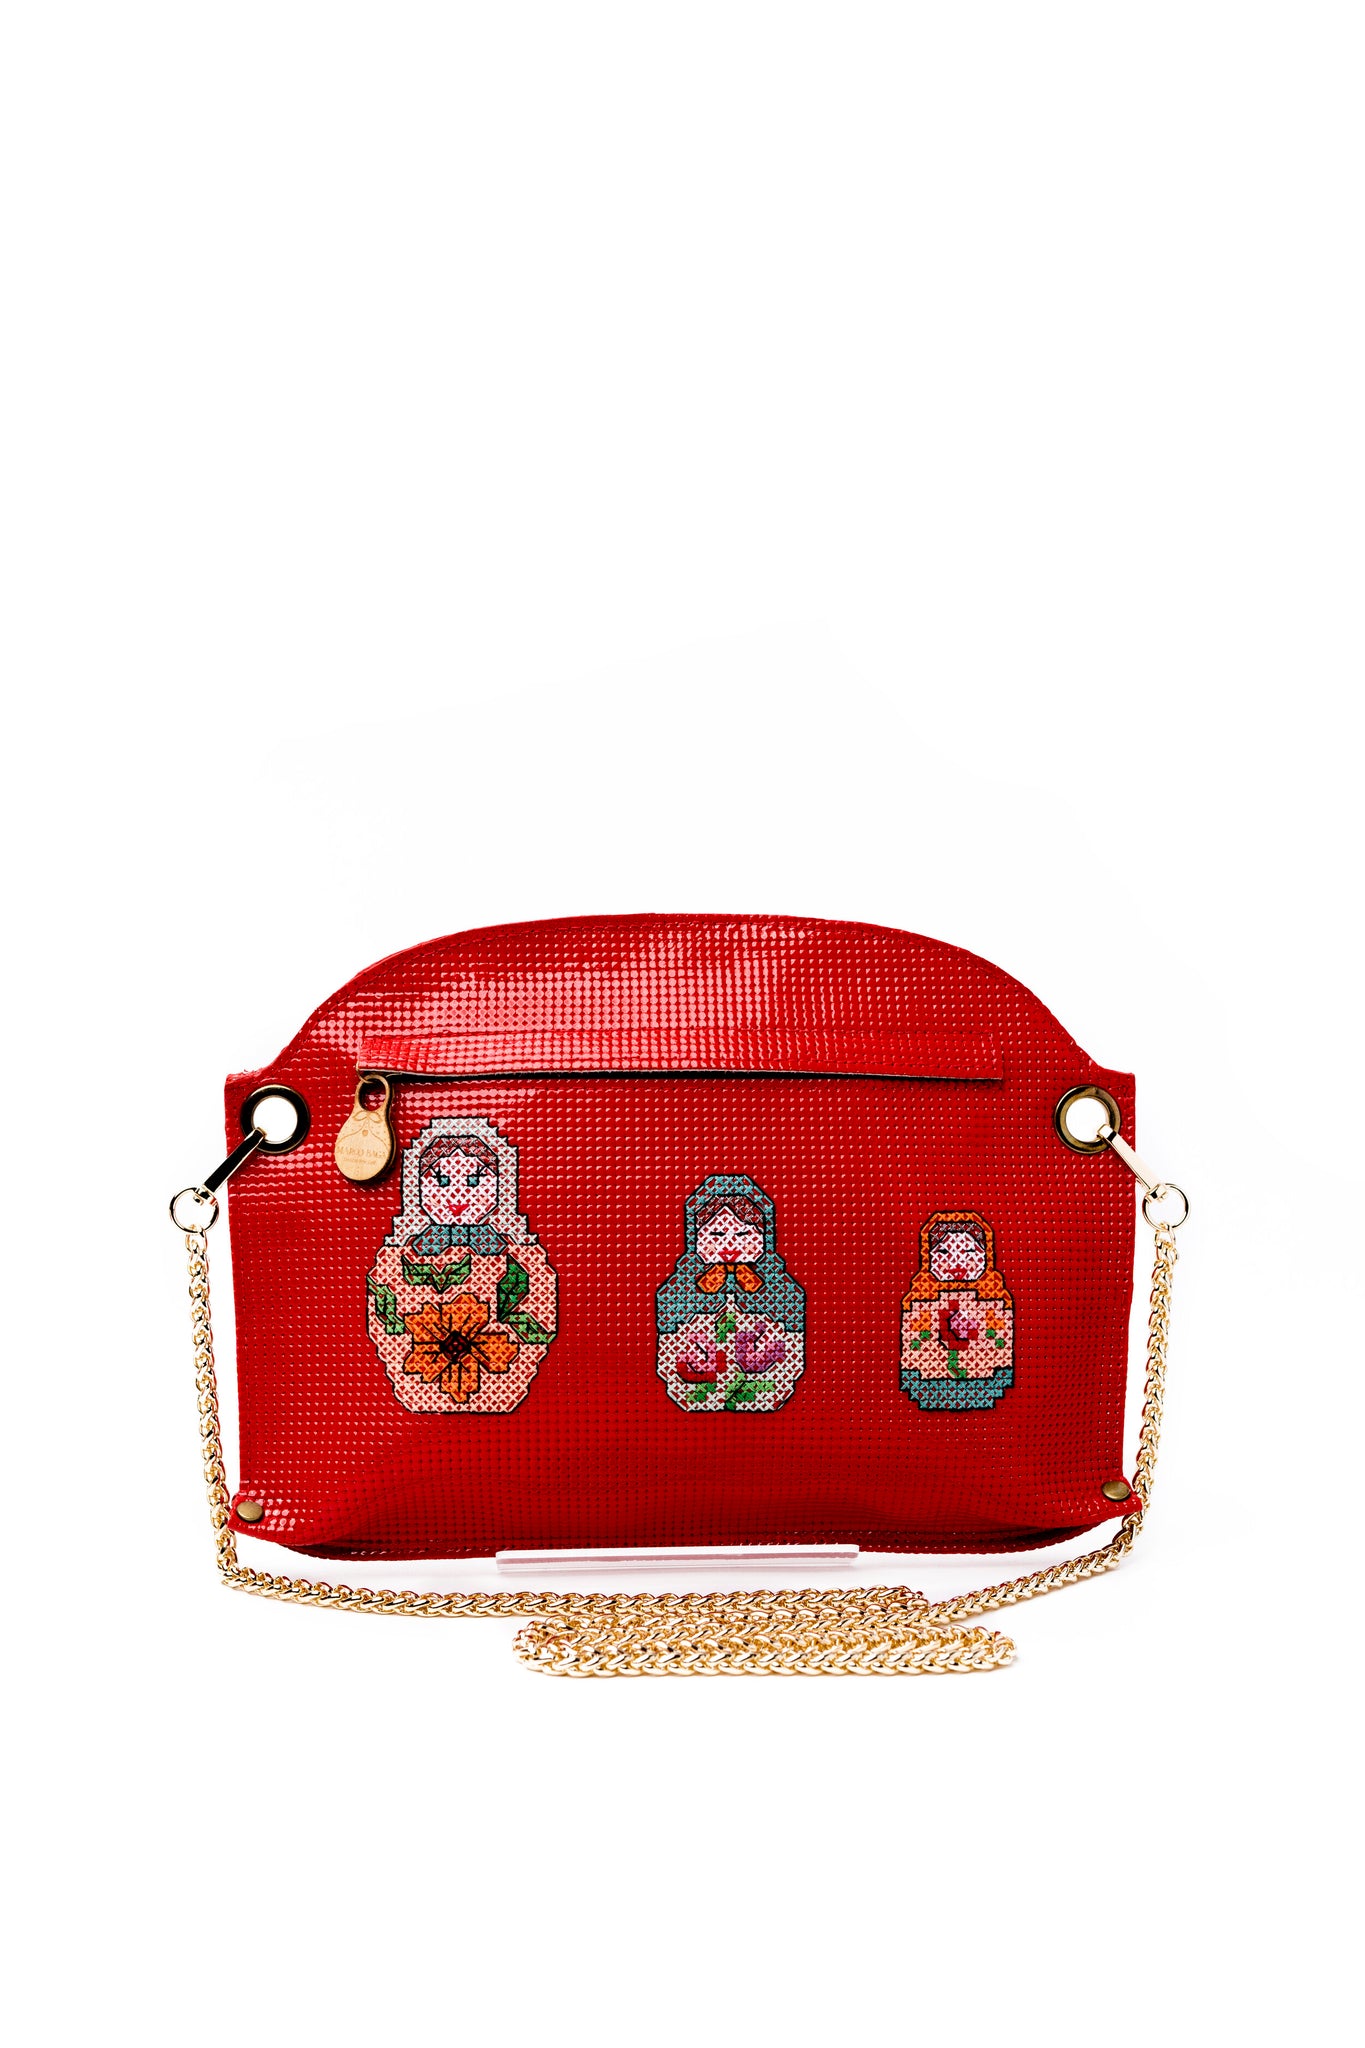 Yuliya in Red Shoulder Bag